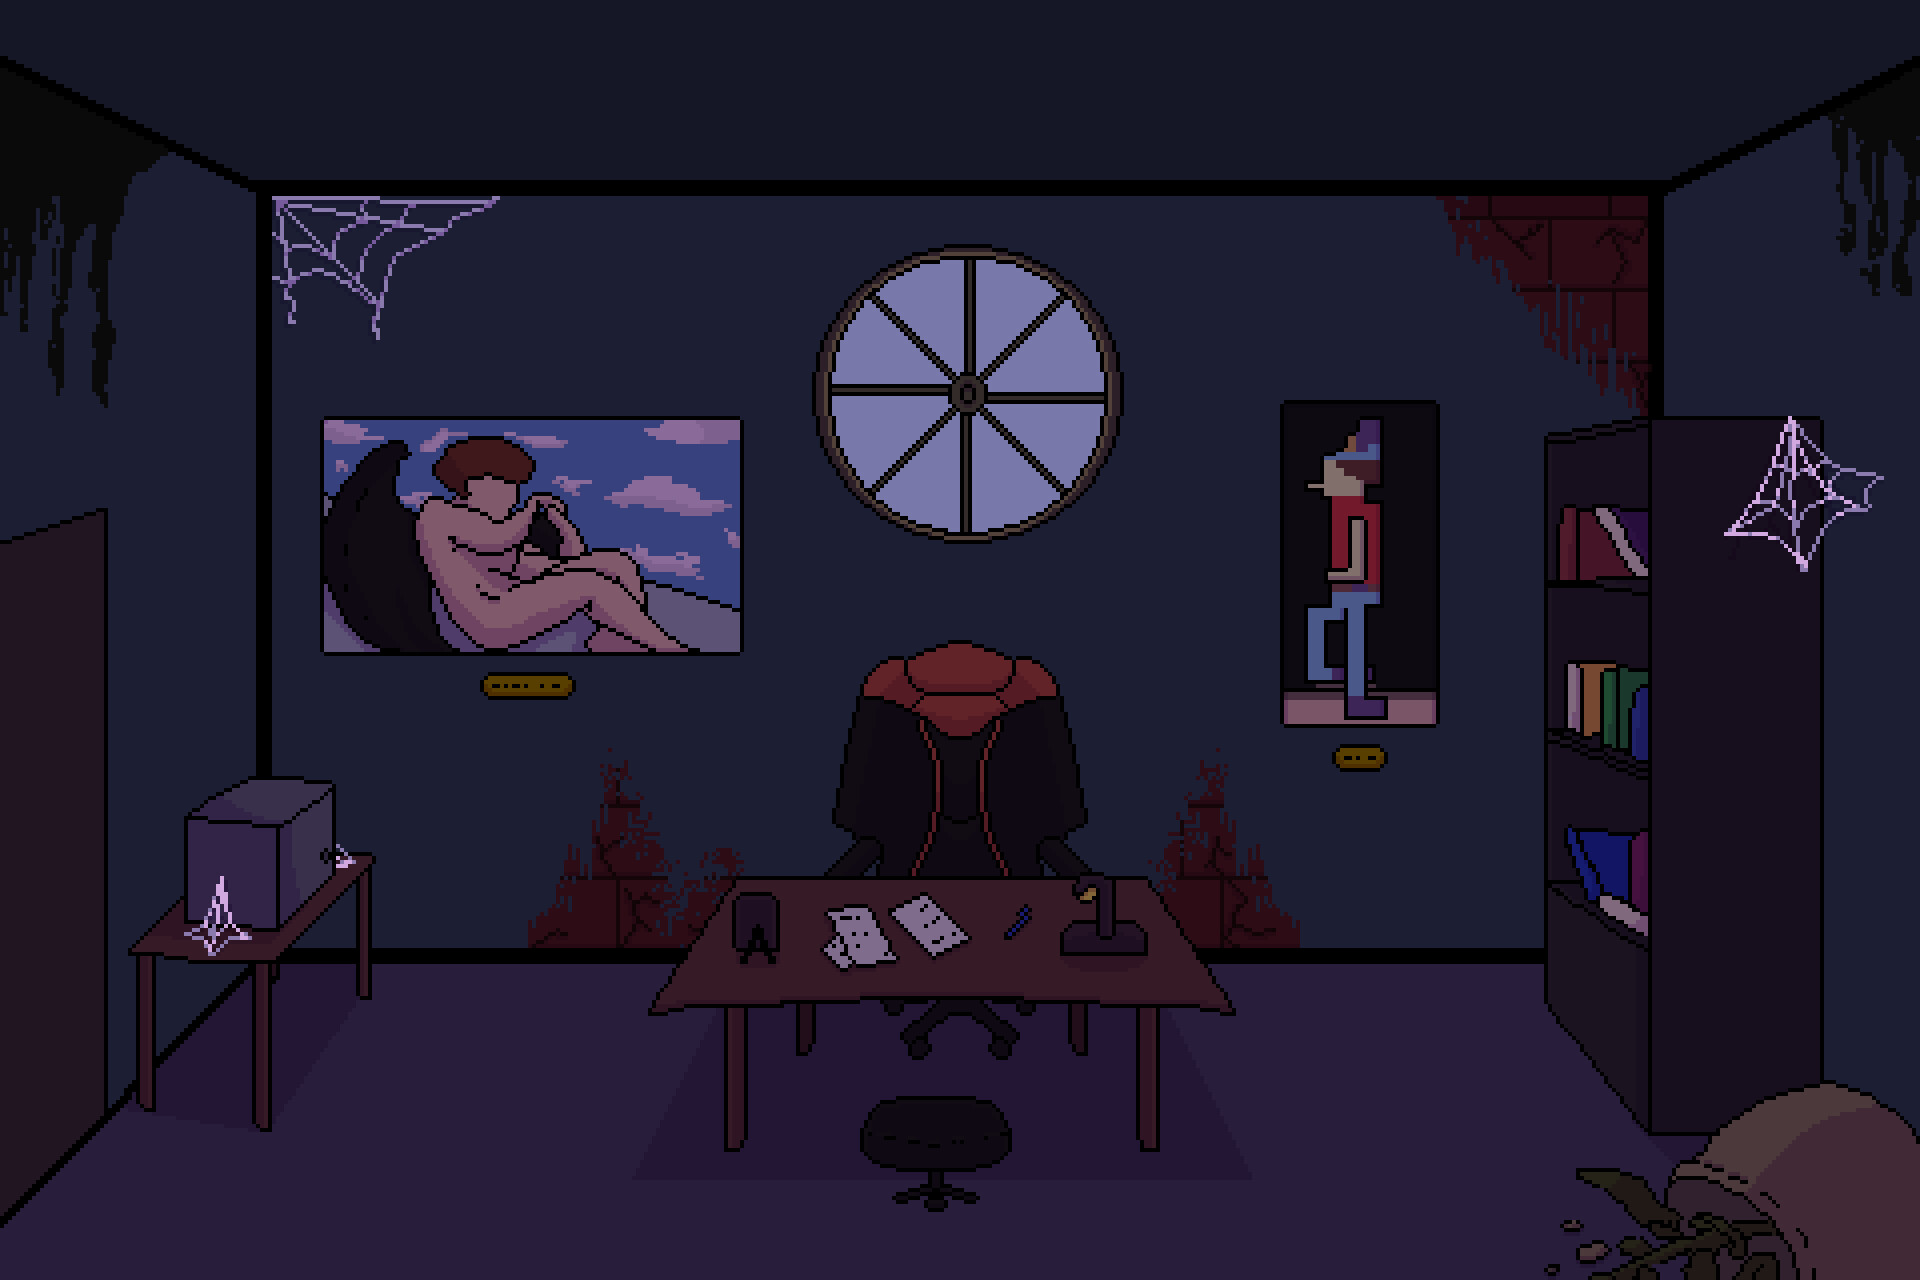 ArtStation - Pixel Art Horror Game Backgrounds